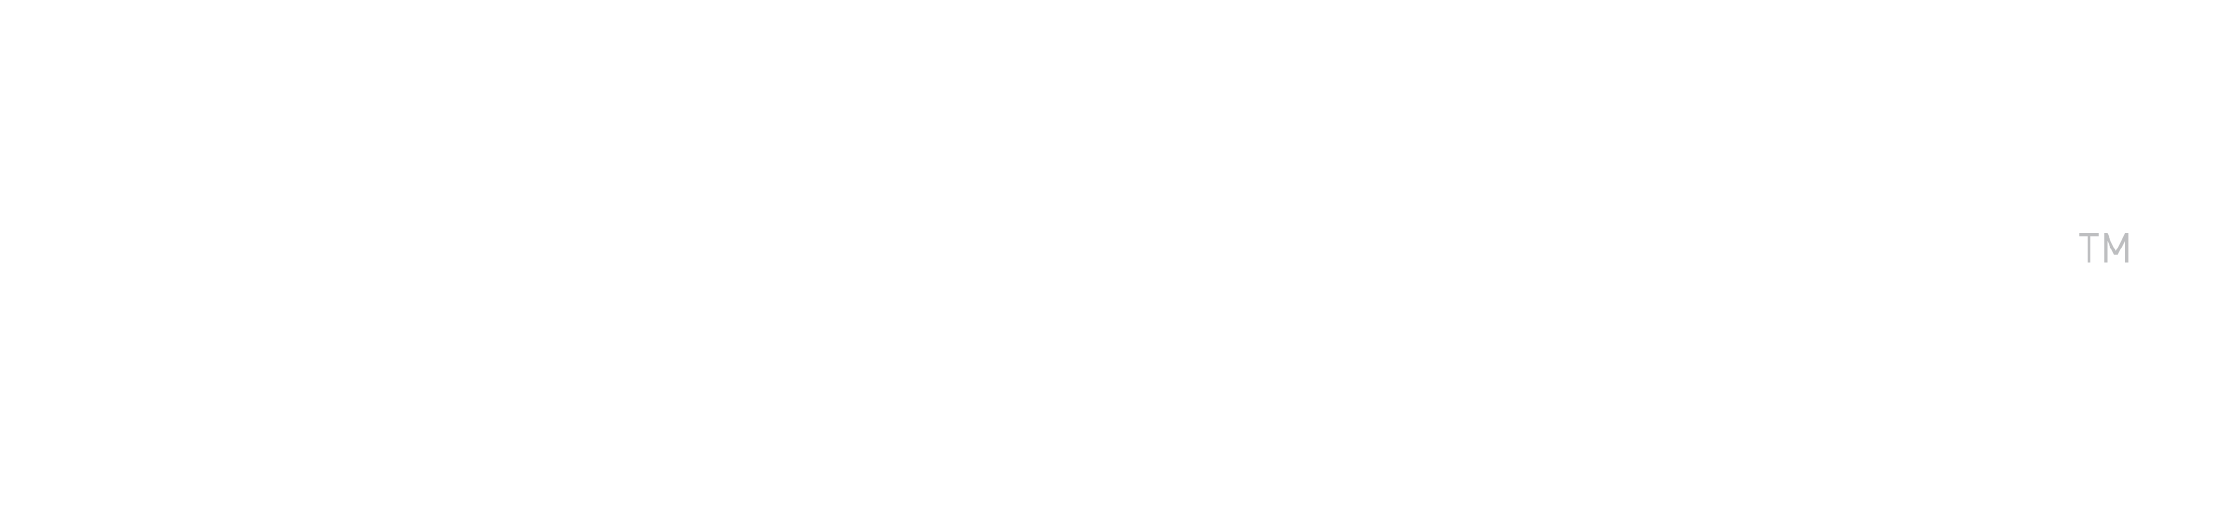 emPerform logo